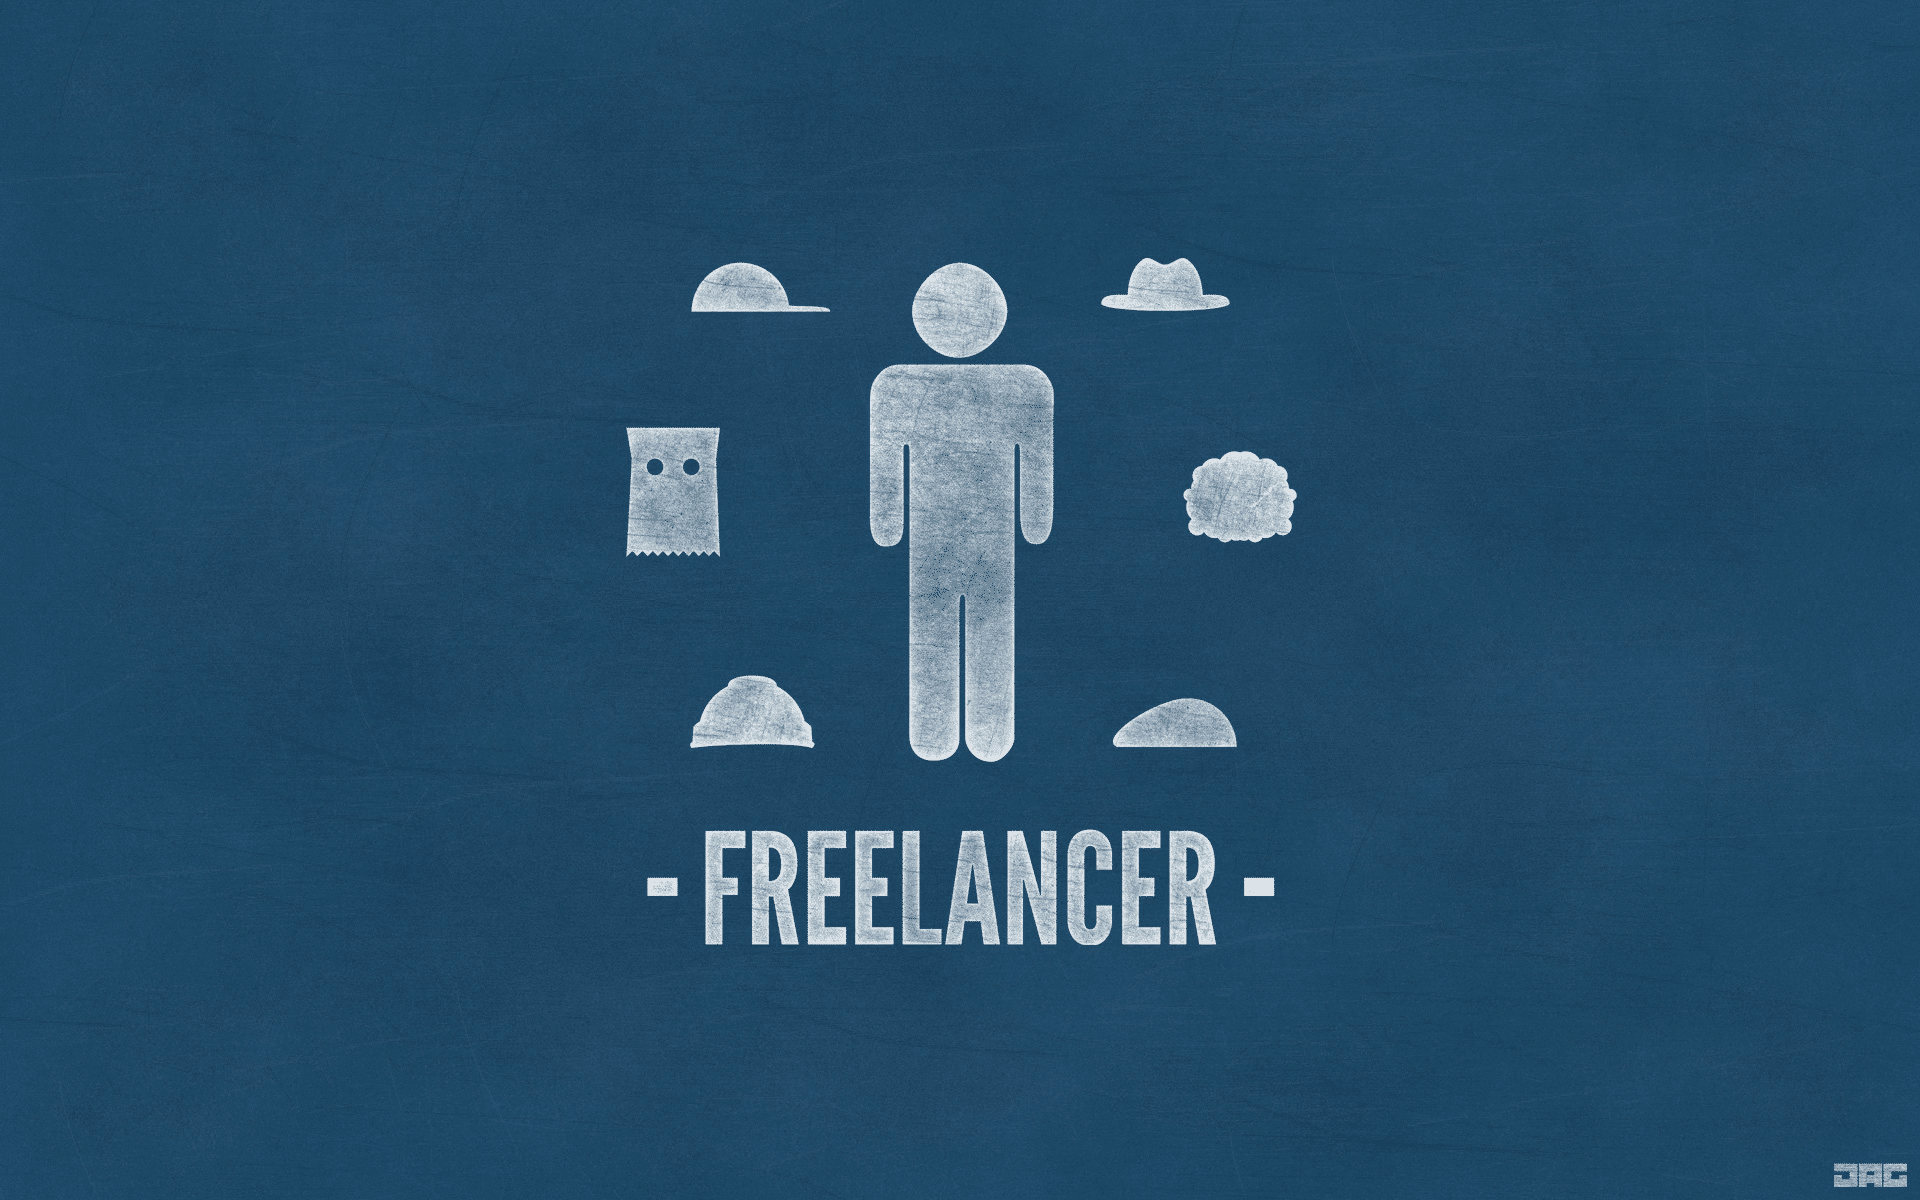 Hiring Freelancers